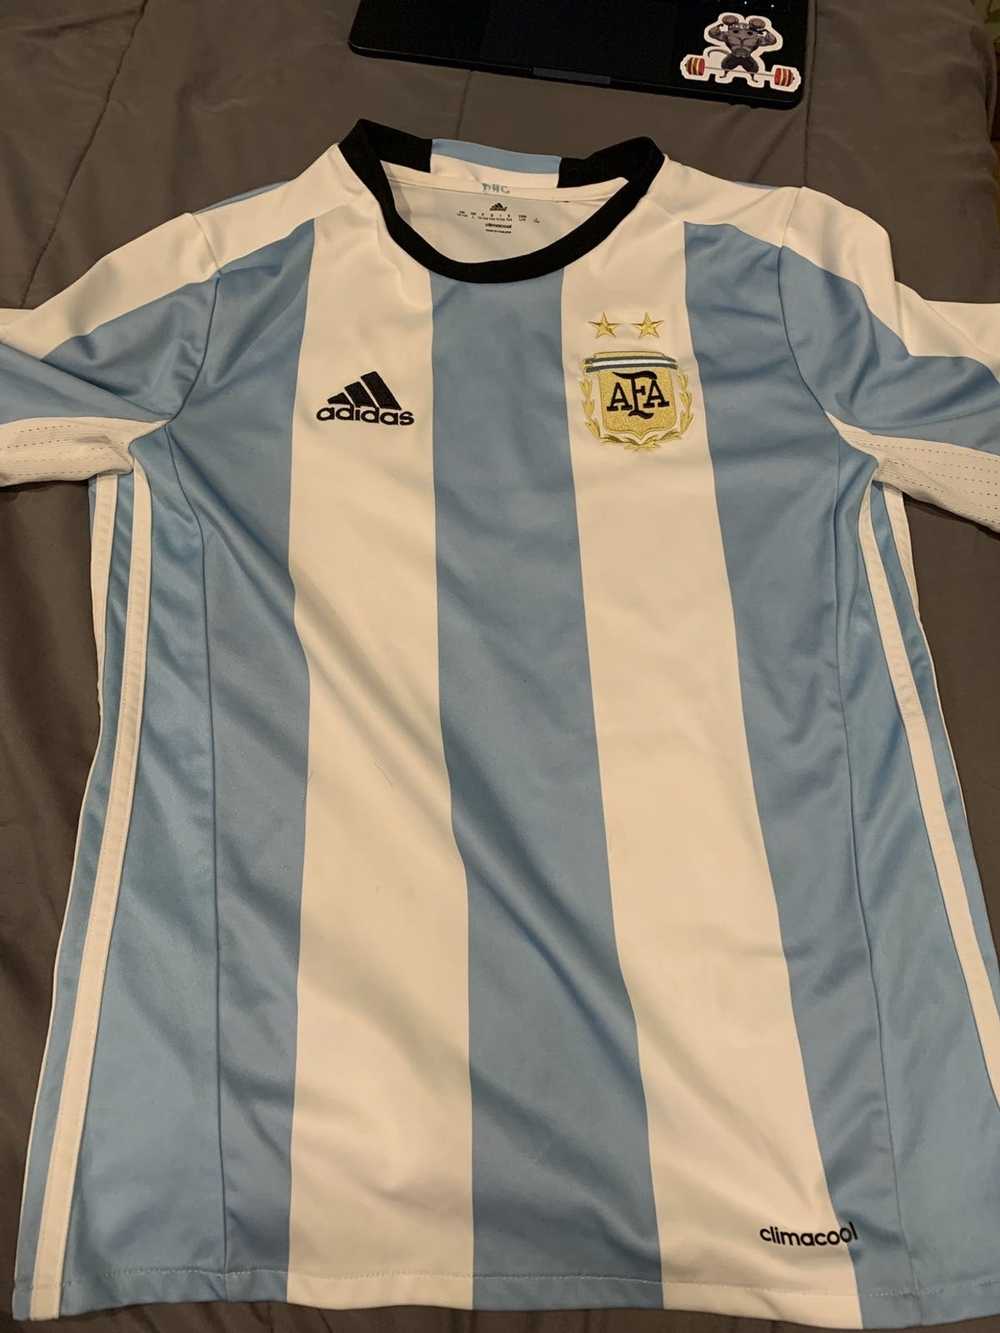 Adidas Argentina Soccer/Football Jersey - image 1